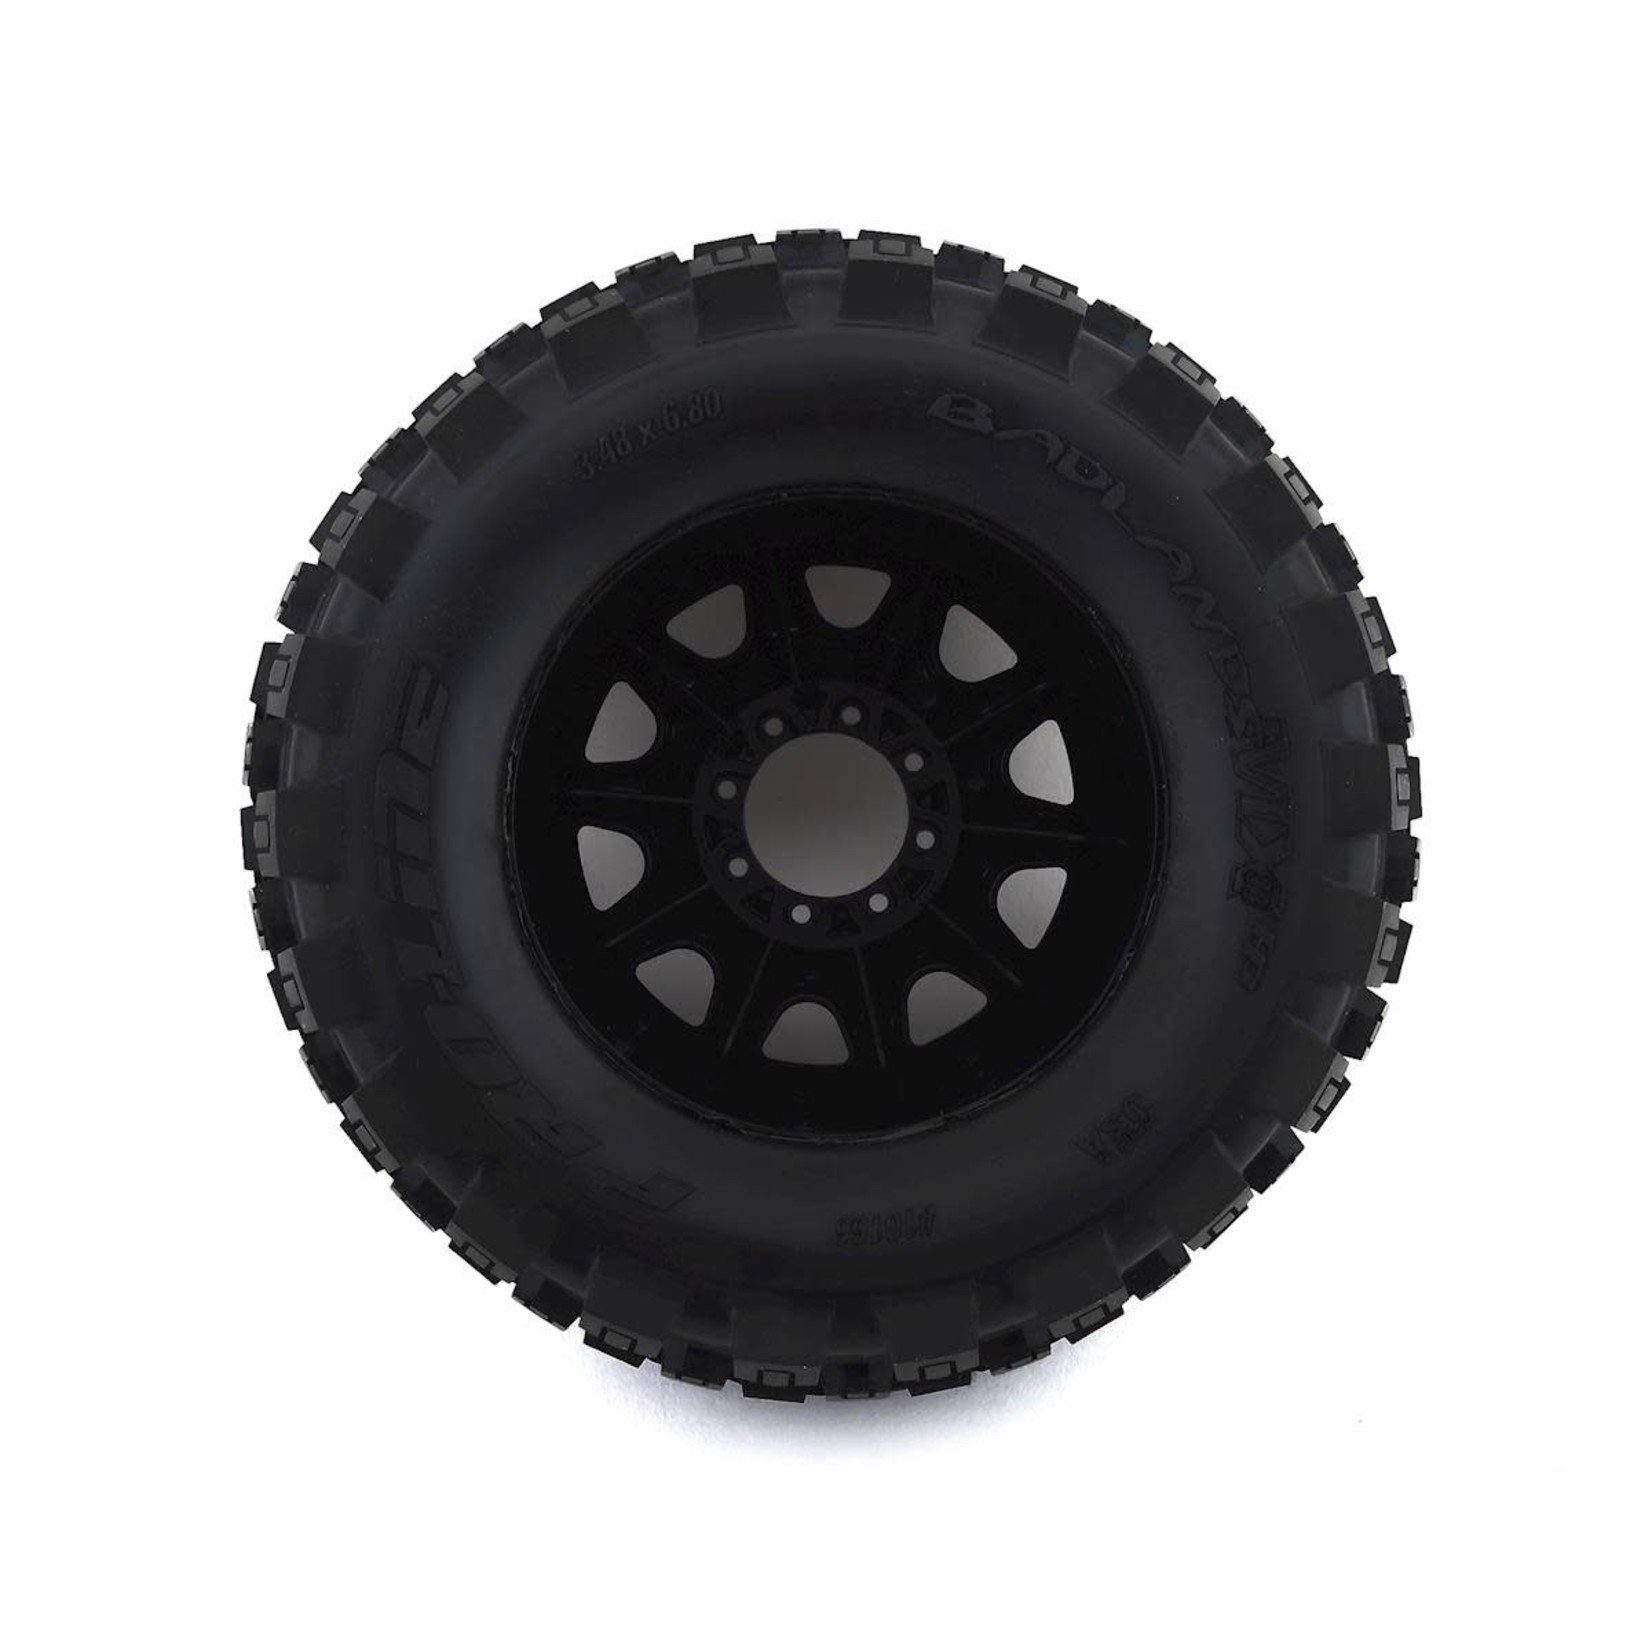 Pro-Line Pro-Line Badlands MX38 HP Belted 3.8" Pre-Mounted Truck Tires (2) (Black) (M2) w/Raid Wheels #10166-10